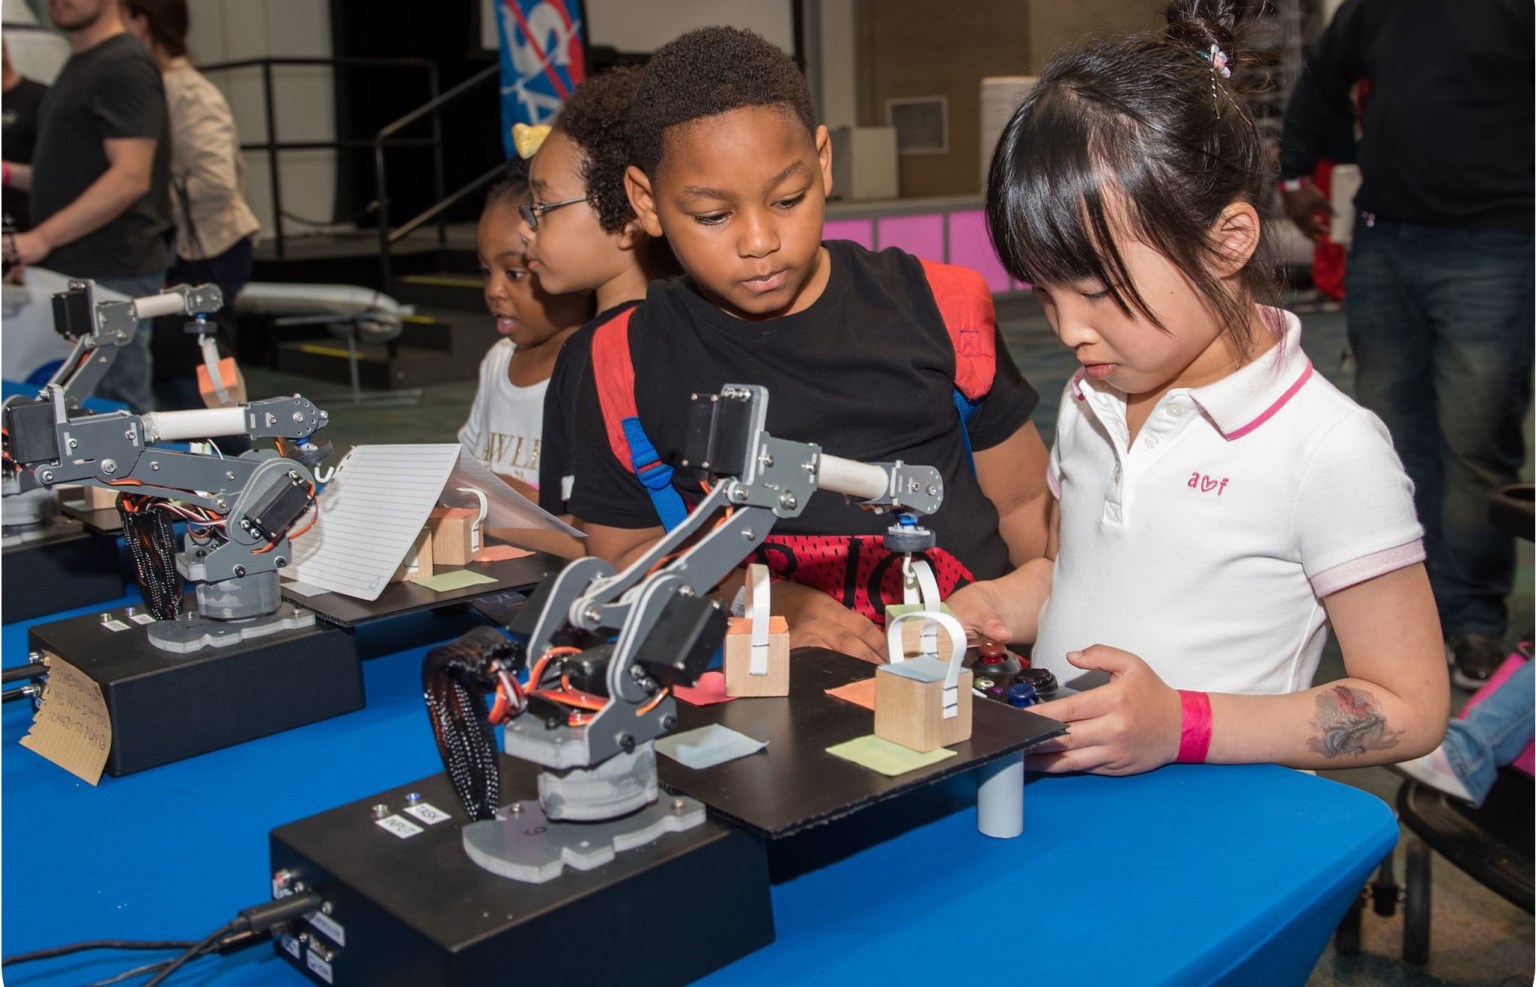 Young students look at a model of a robotic arm